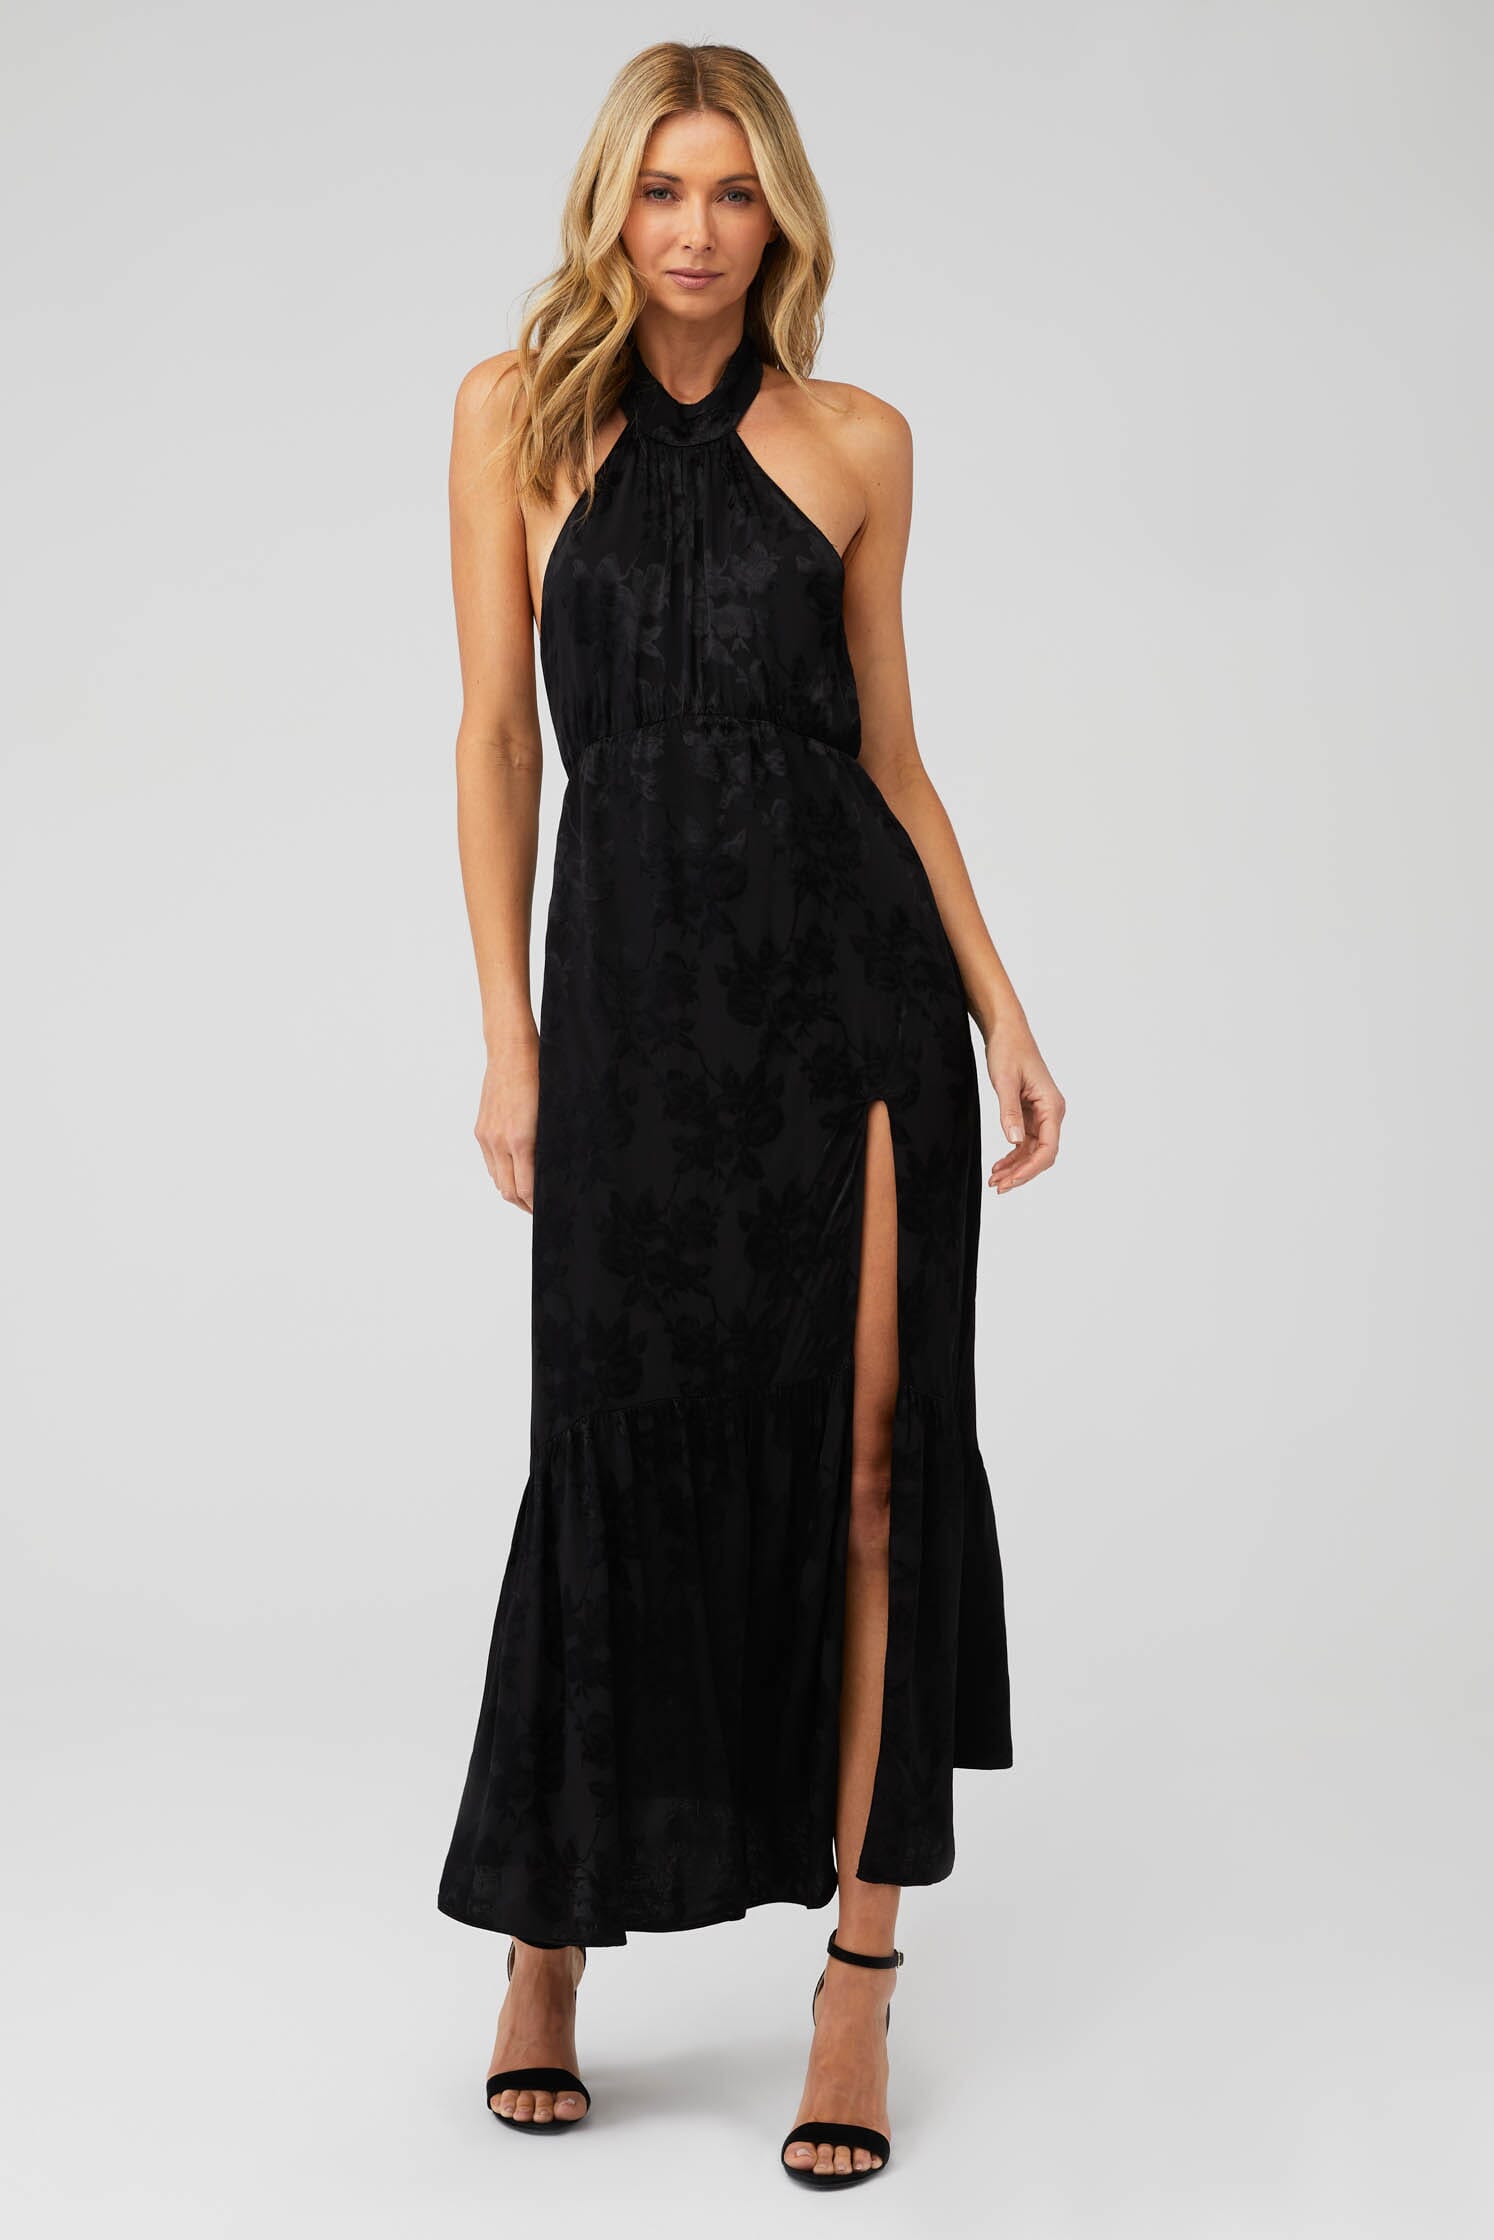 Saylor | Audie Dress in Black| FashionPass